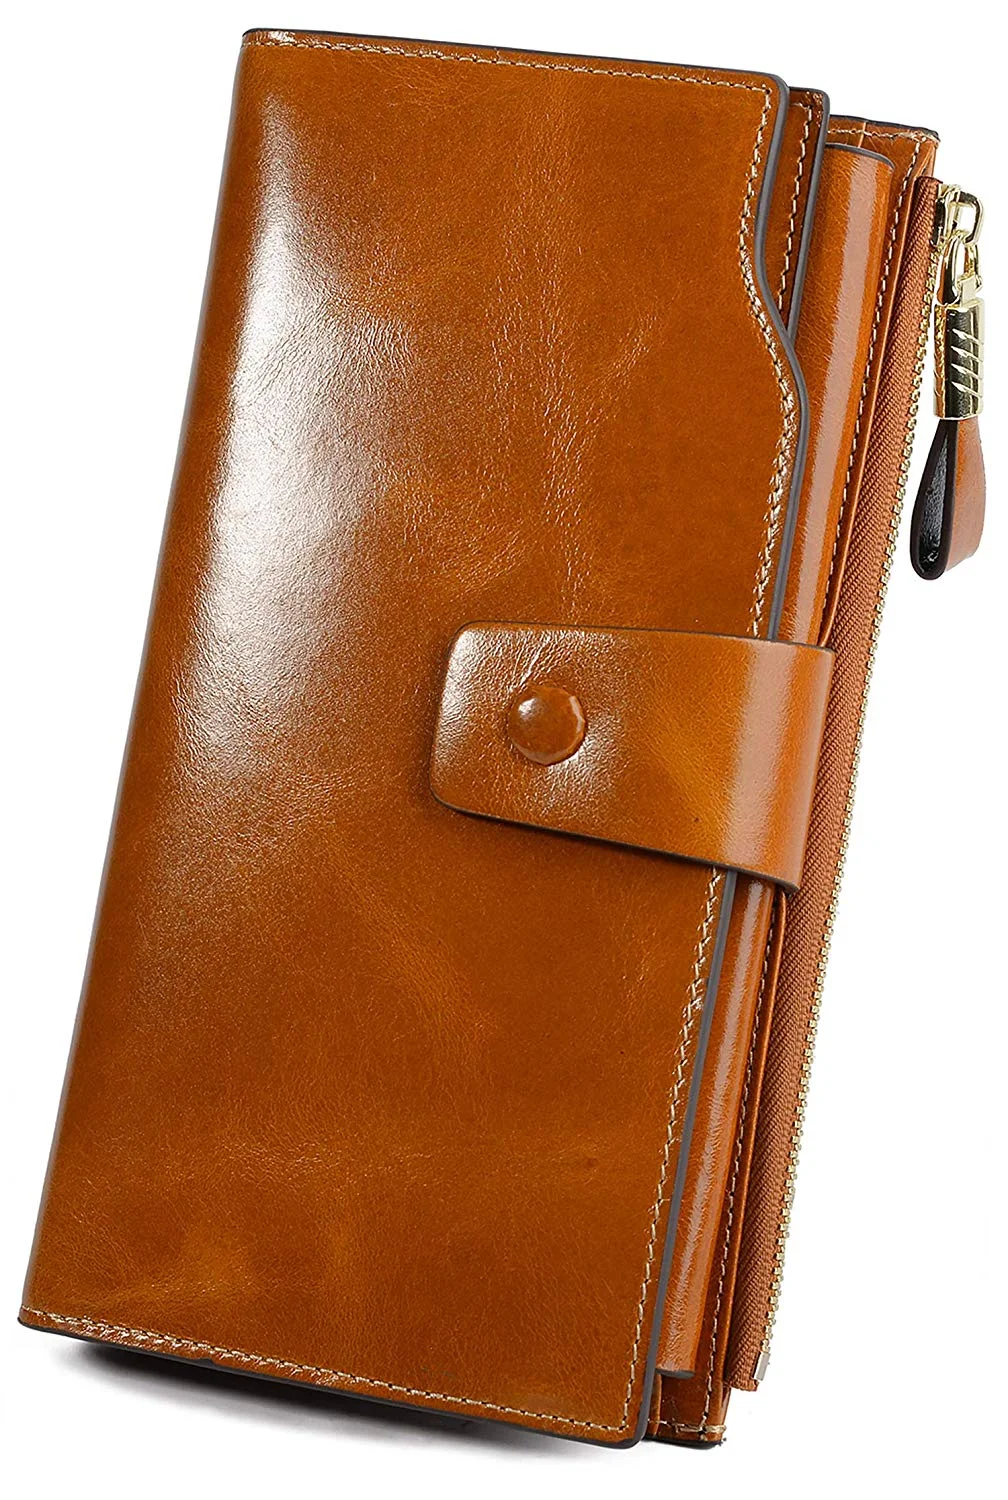 Genuine Leather Wallet Women's RFID Blocking Large Capacity Luxury Wax Clutch Multi Card Organizer